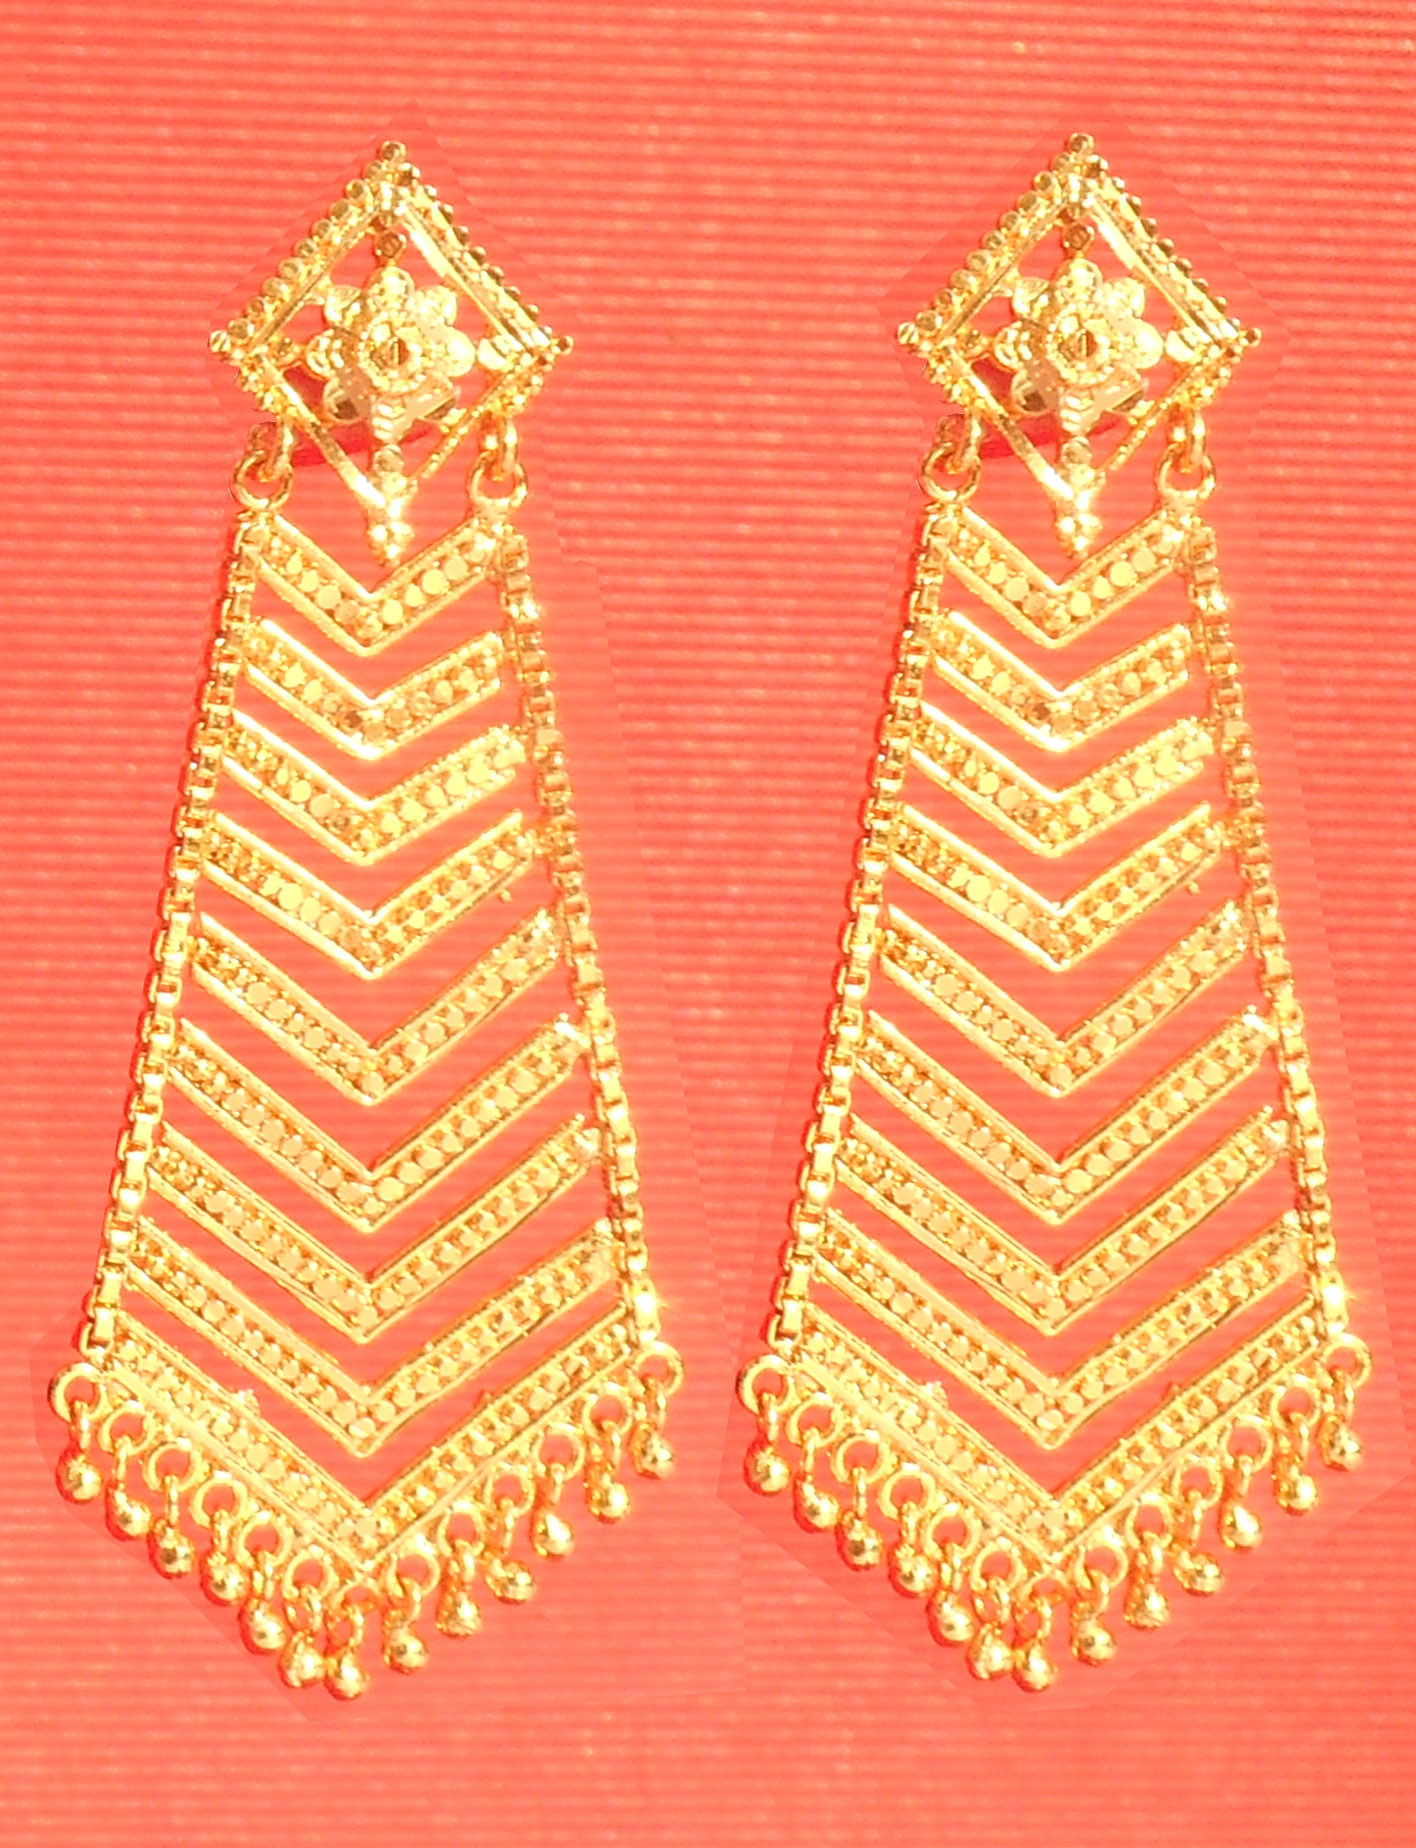 One Gram Gold Plated Earrings Limited offer Ã¢â€šÂ¹150   40% Off @Vmaxo